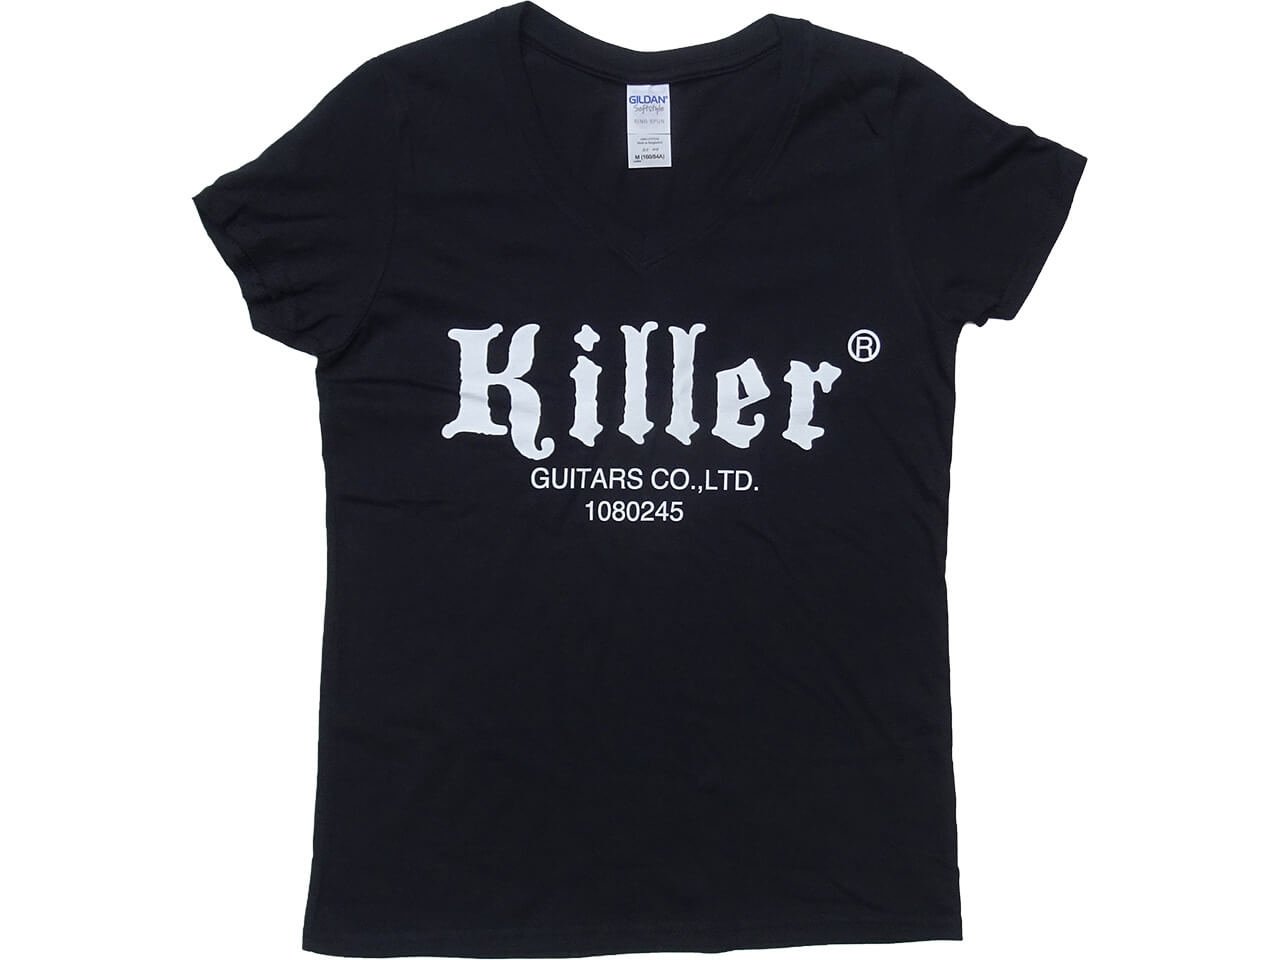 Killer(キラー) ロゴ入りTシャツ (Black / Ladies Size)